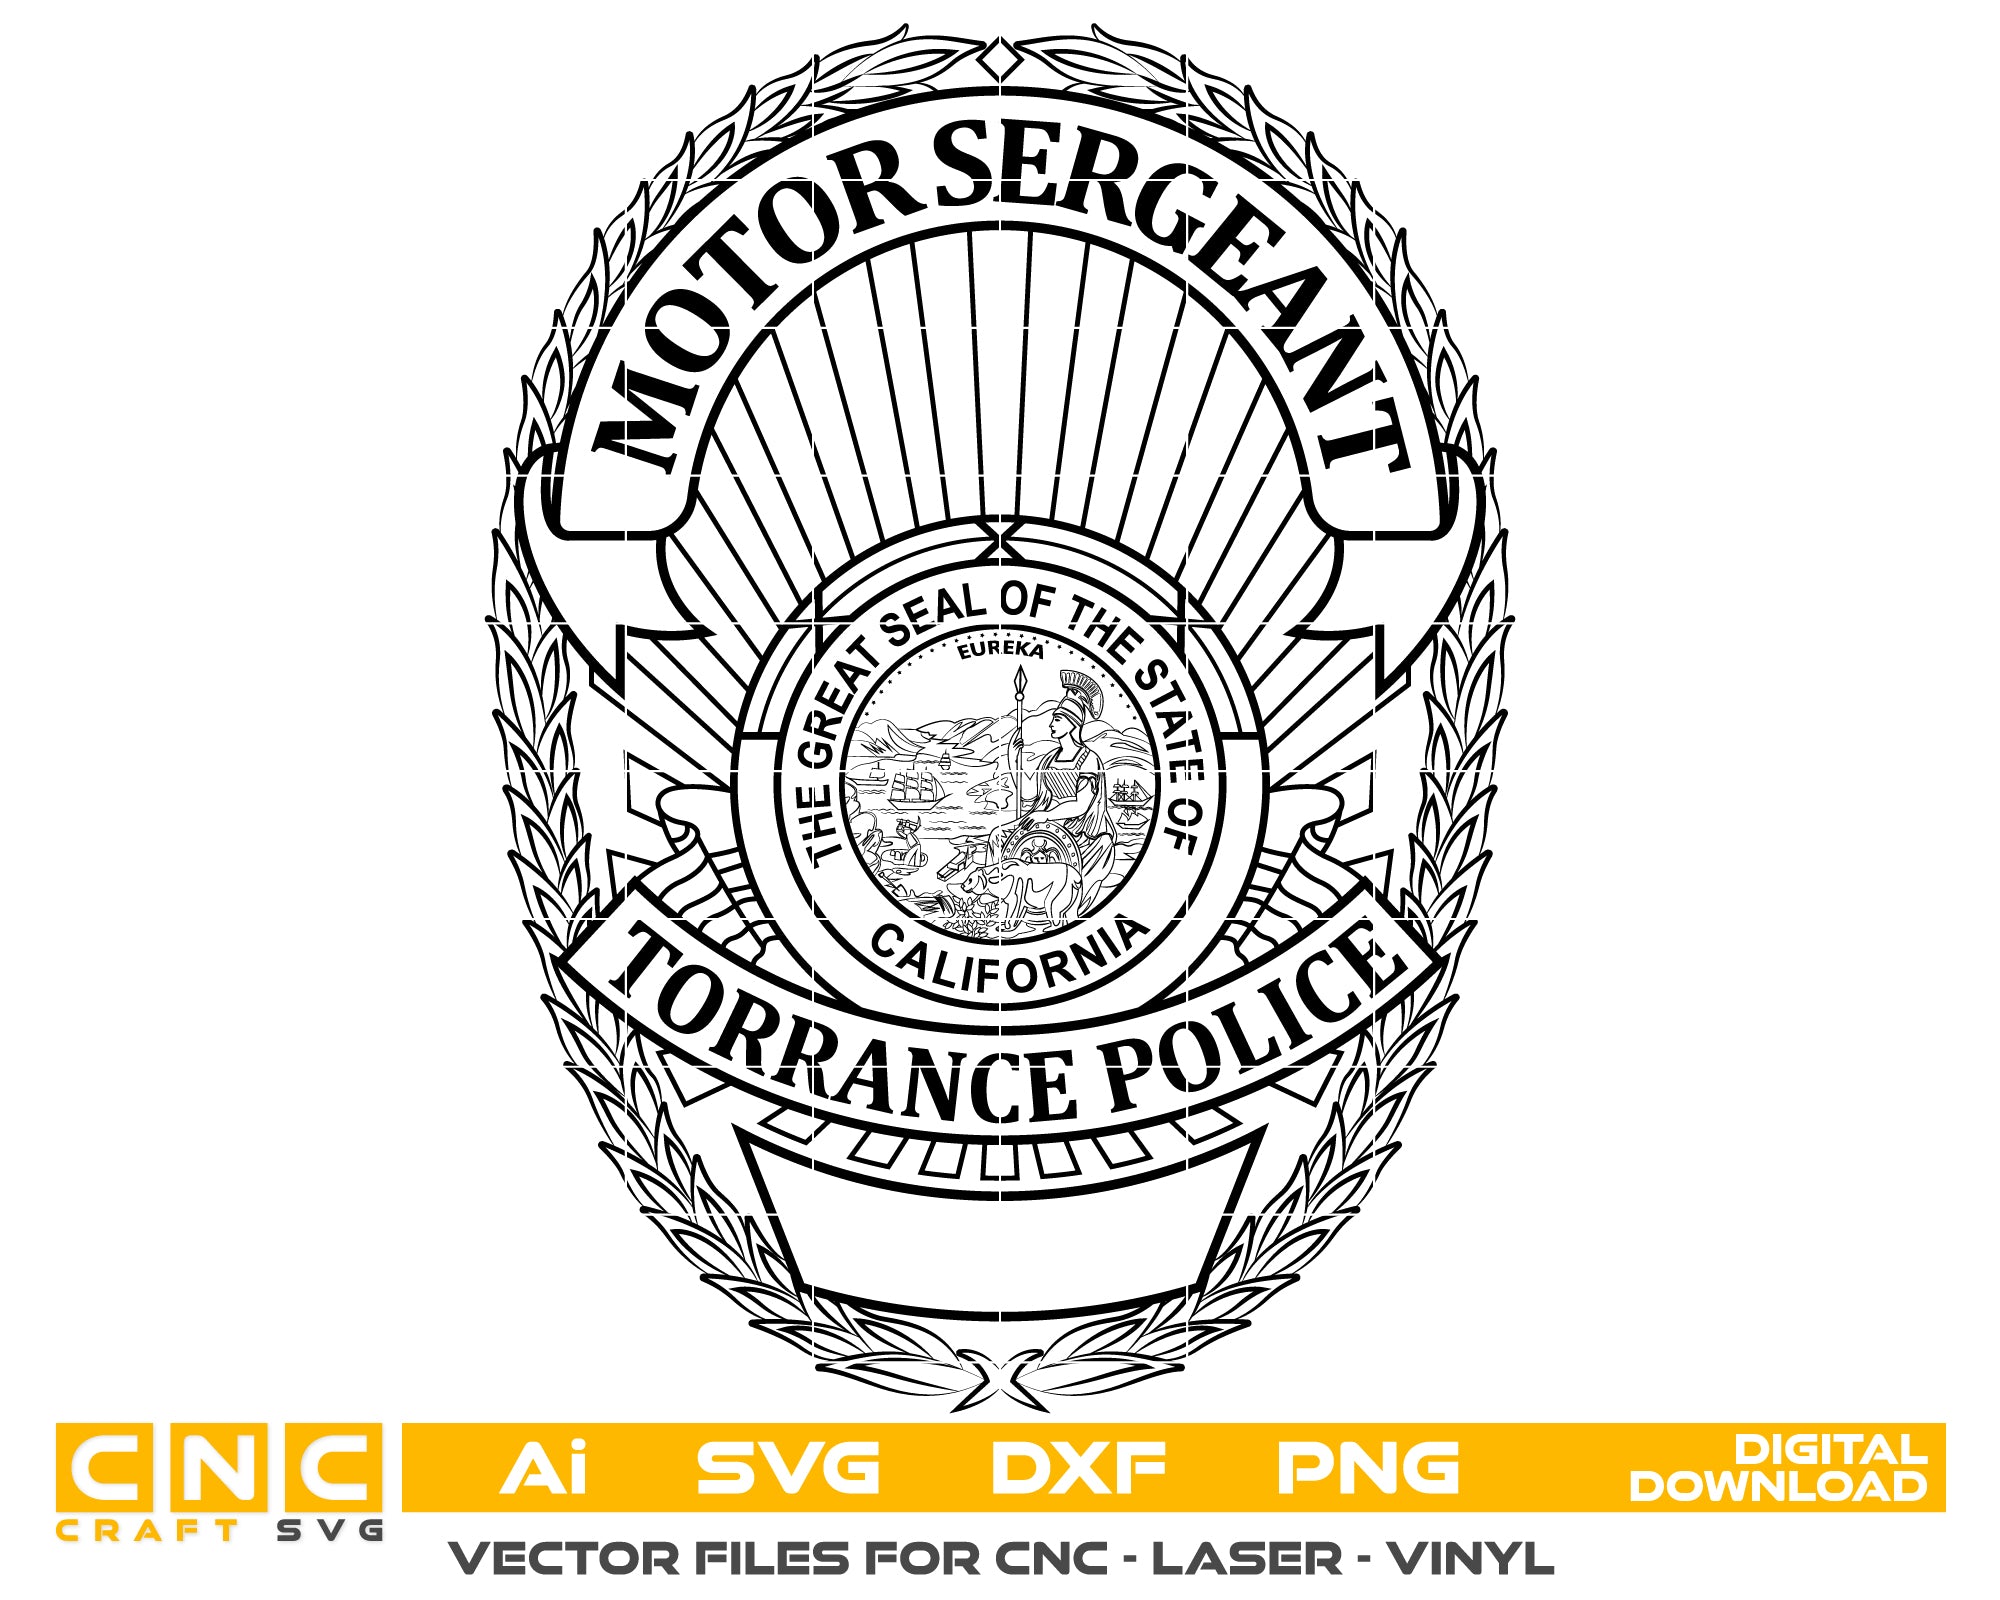 Torrance Police Motor Sergrant Seal Vector Art